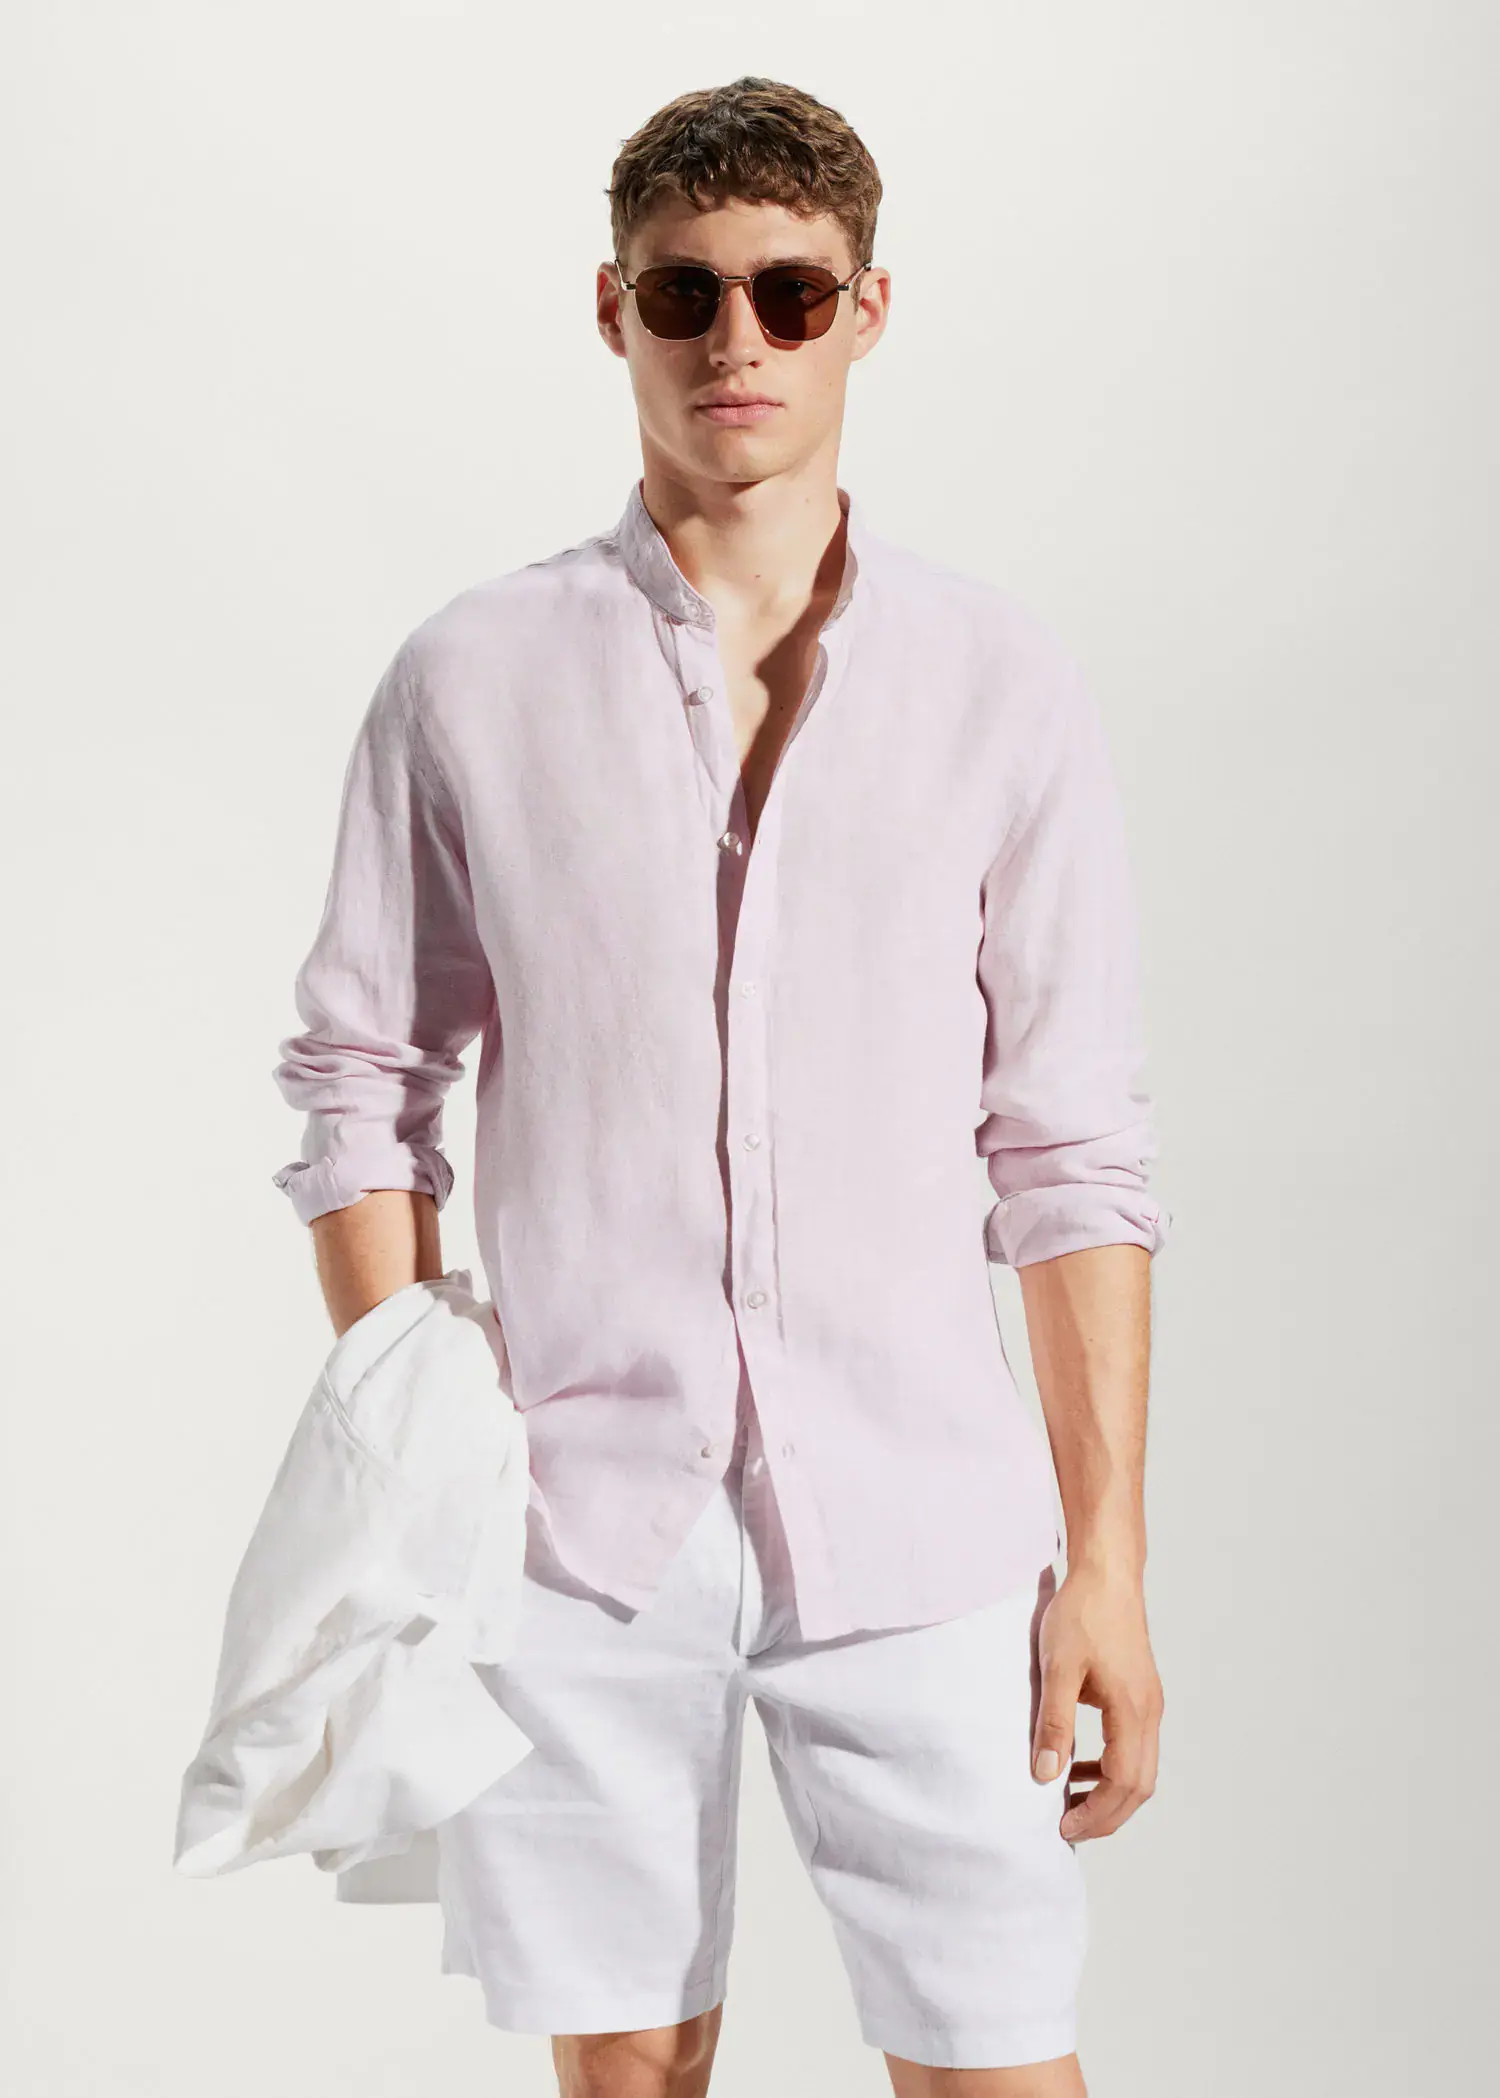 Mango 100% linen Mao collar shirt. a man wearing a pink shirt and white shorts. 